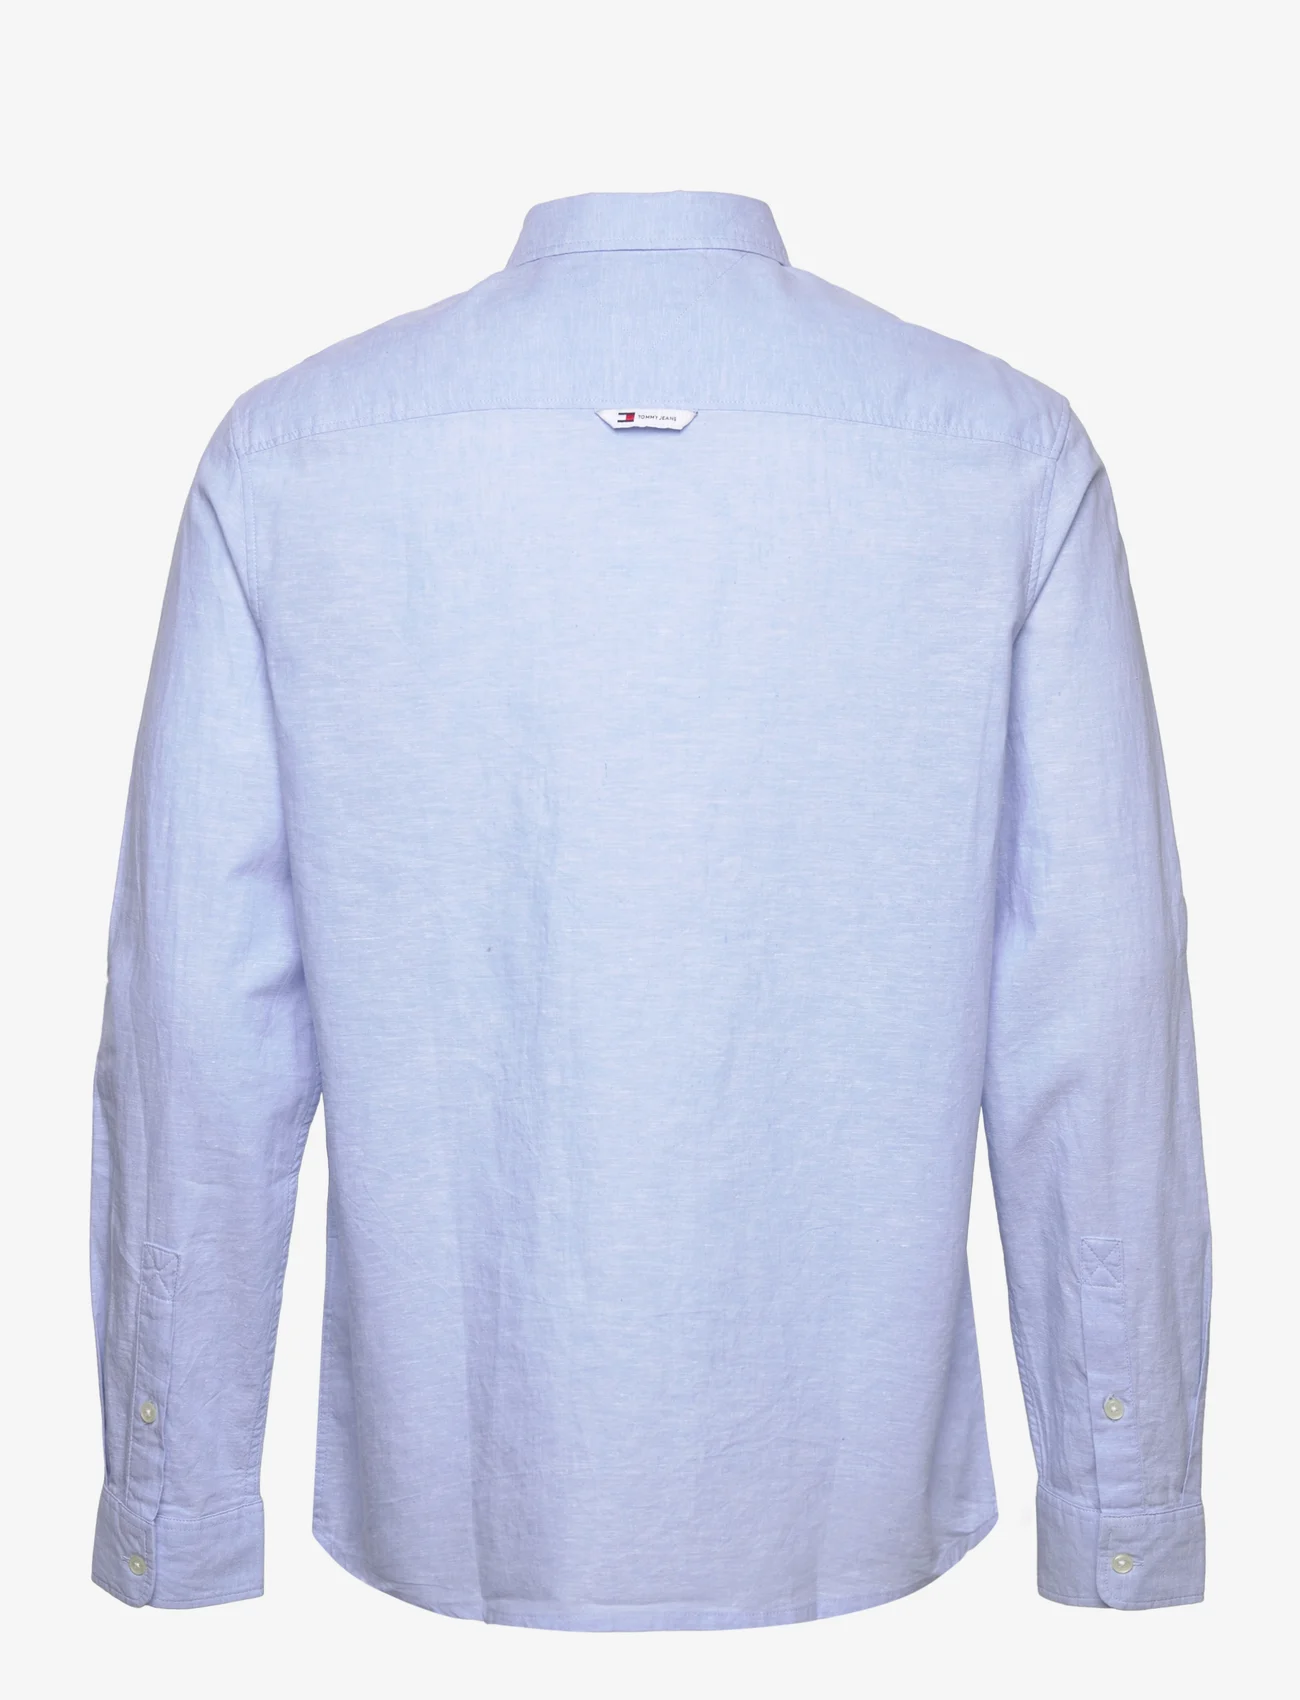 Tommy Jeans - TJM REG LINEN BLEND SHIRT - lininiai marškiniai - moderate blue - 1